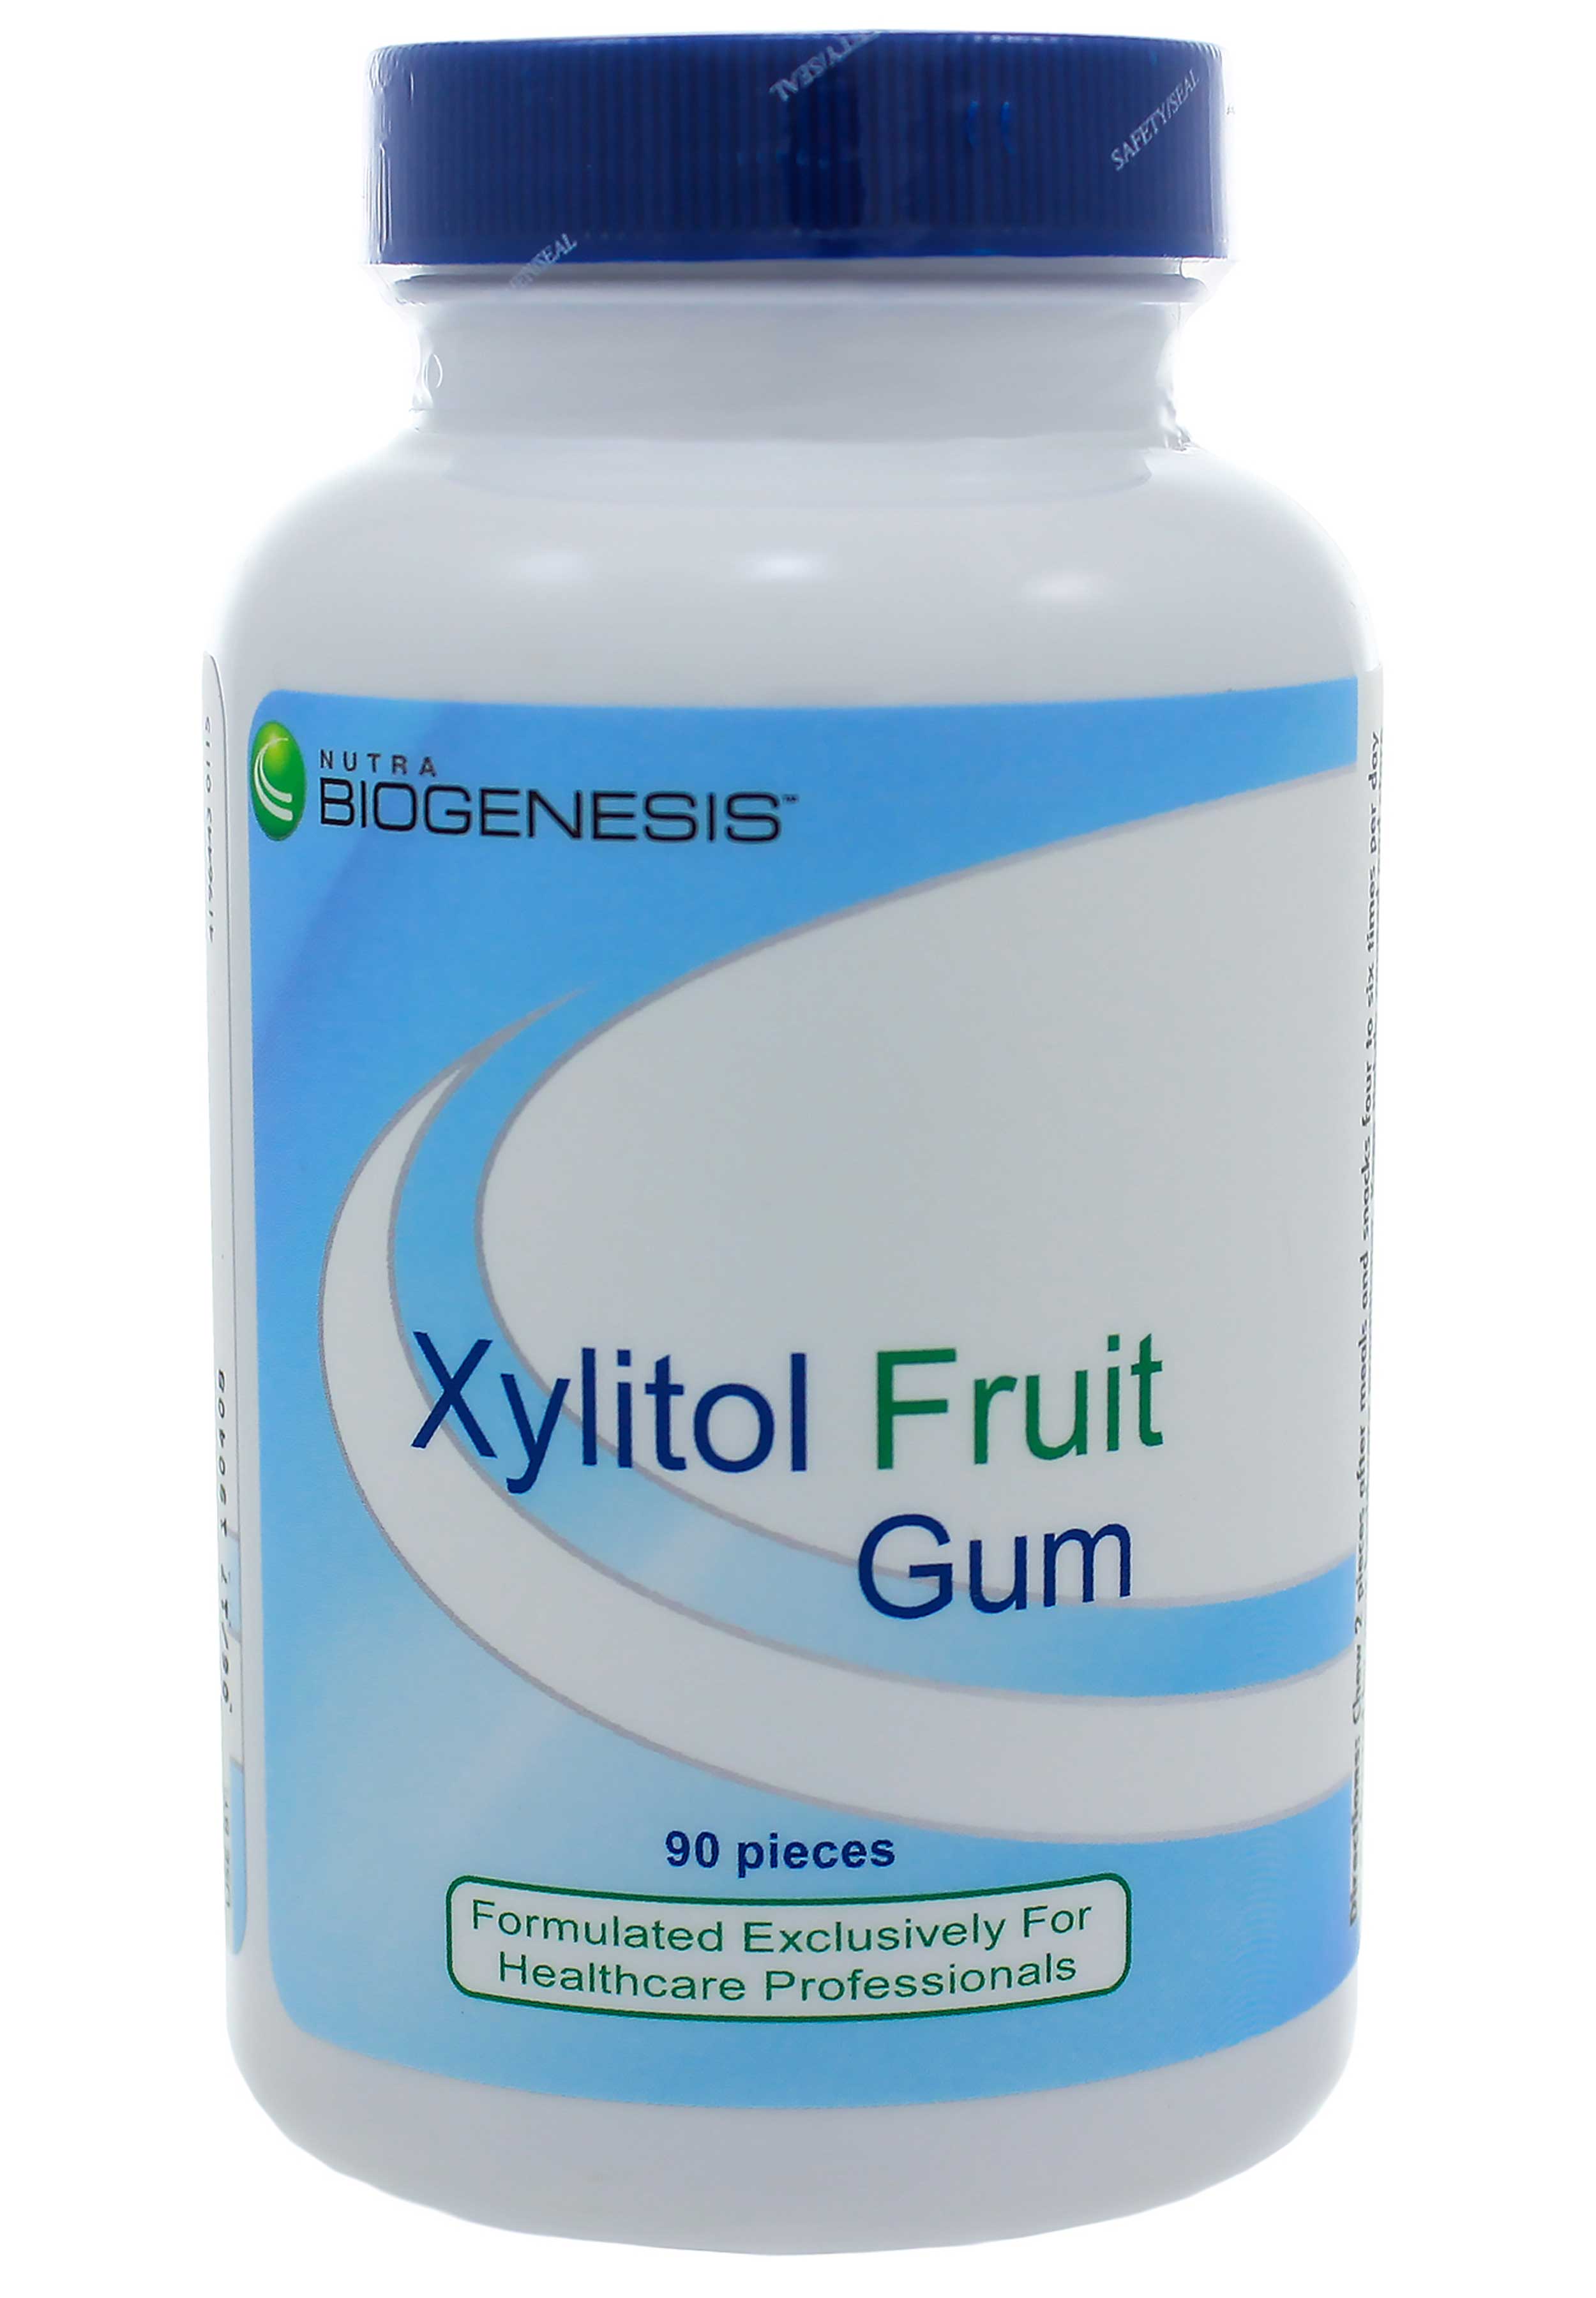 BioGenesis Xylitol Fruit Gum